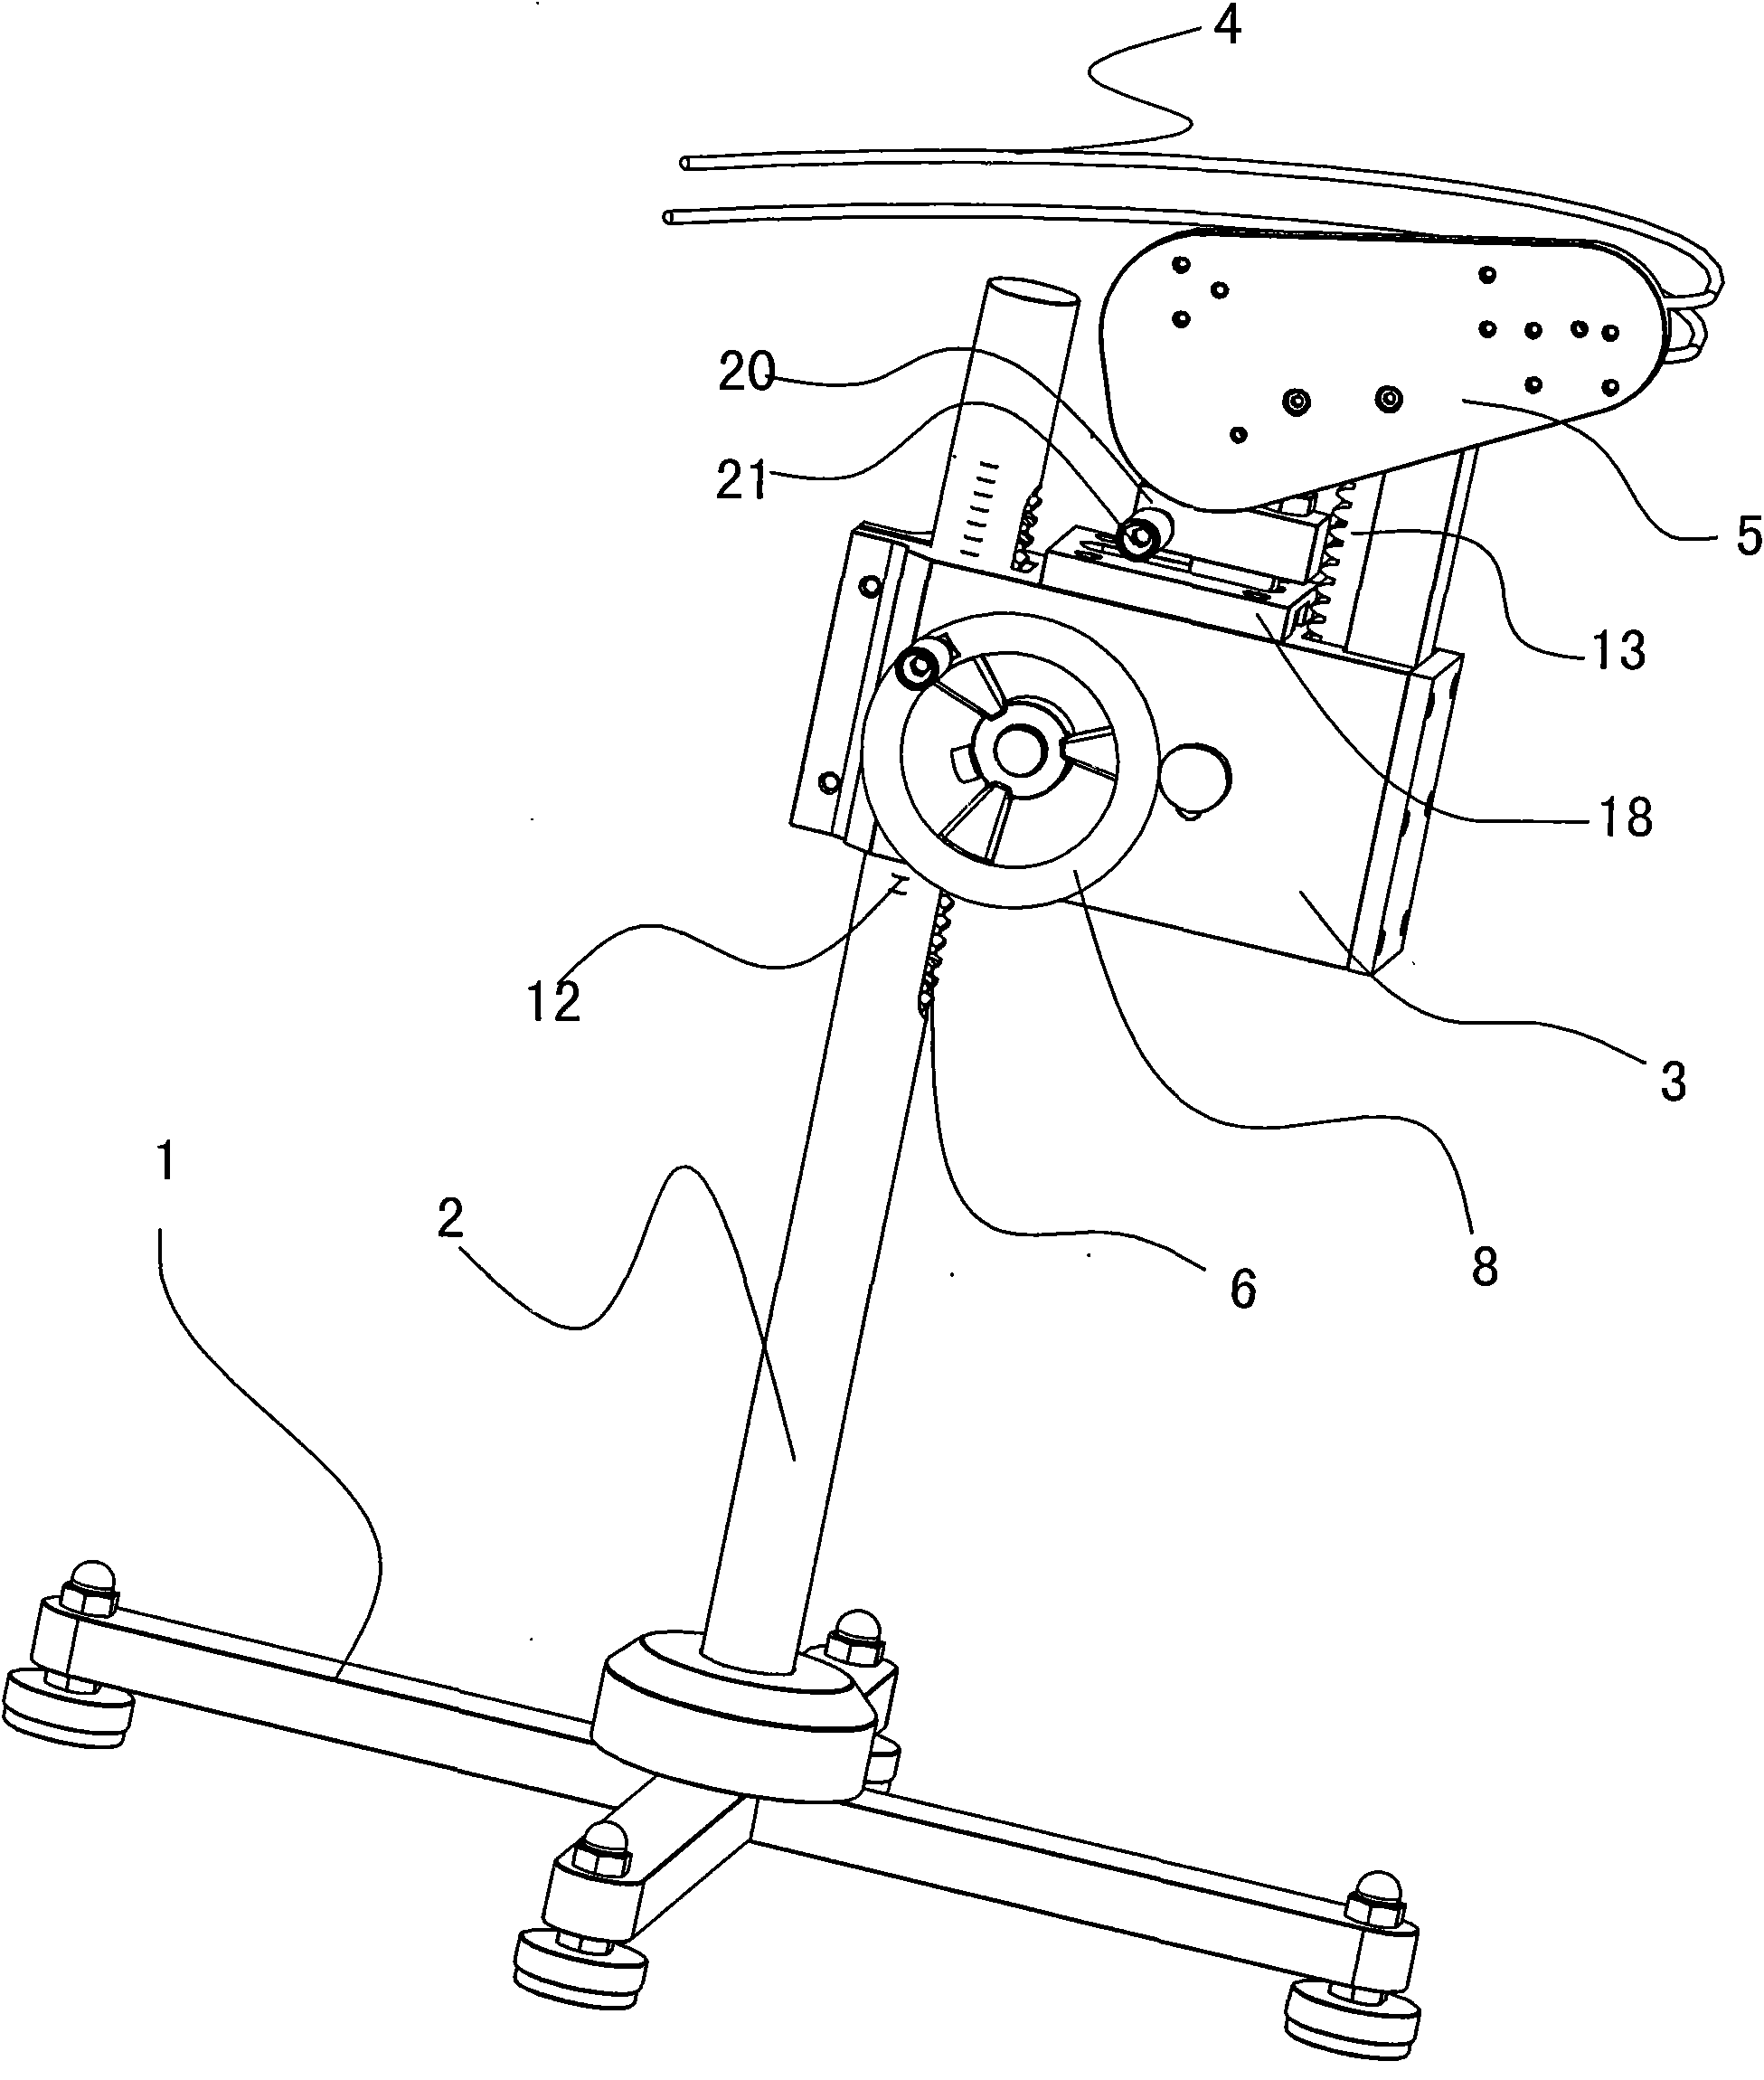 Method cutting lower hem of skirt and cutting machine